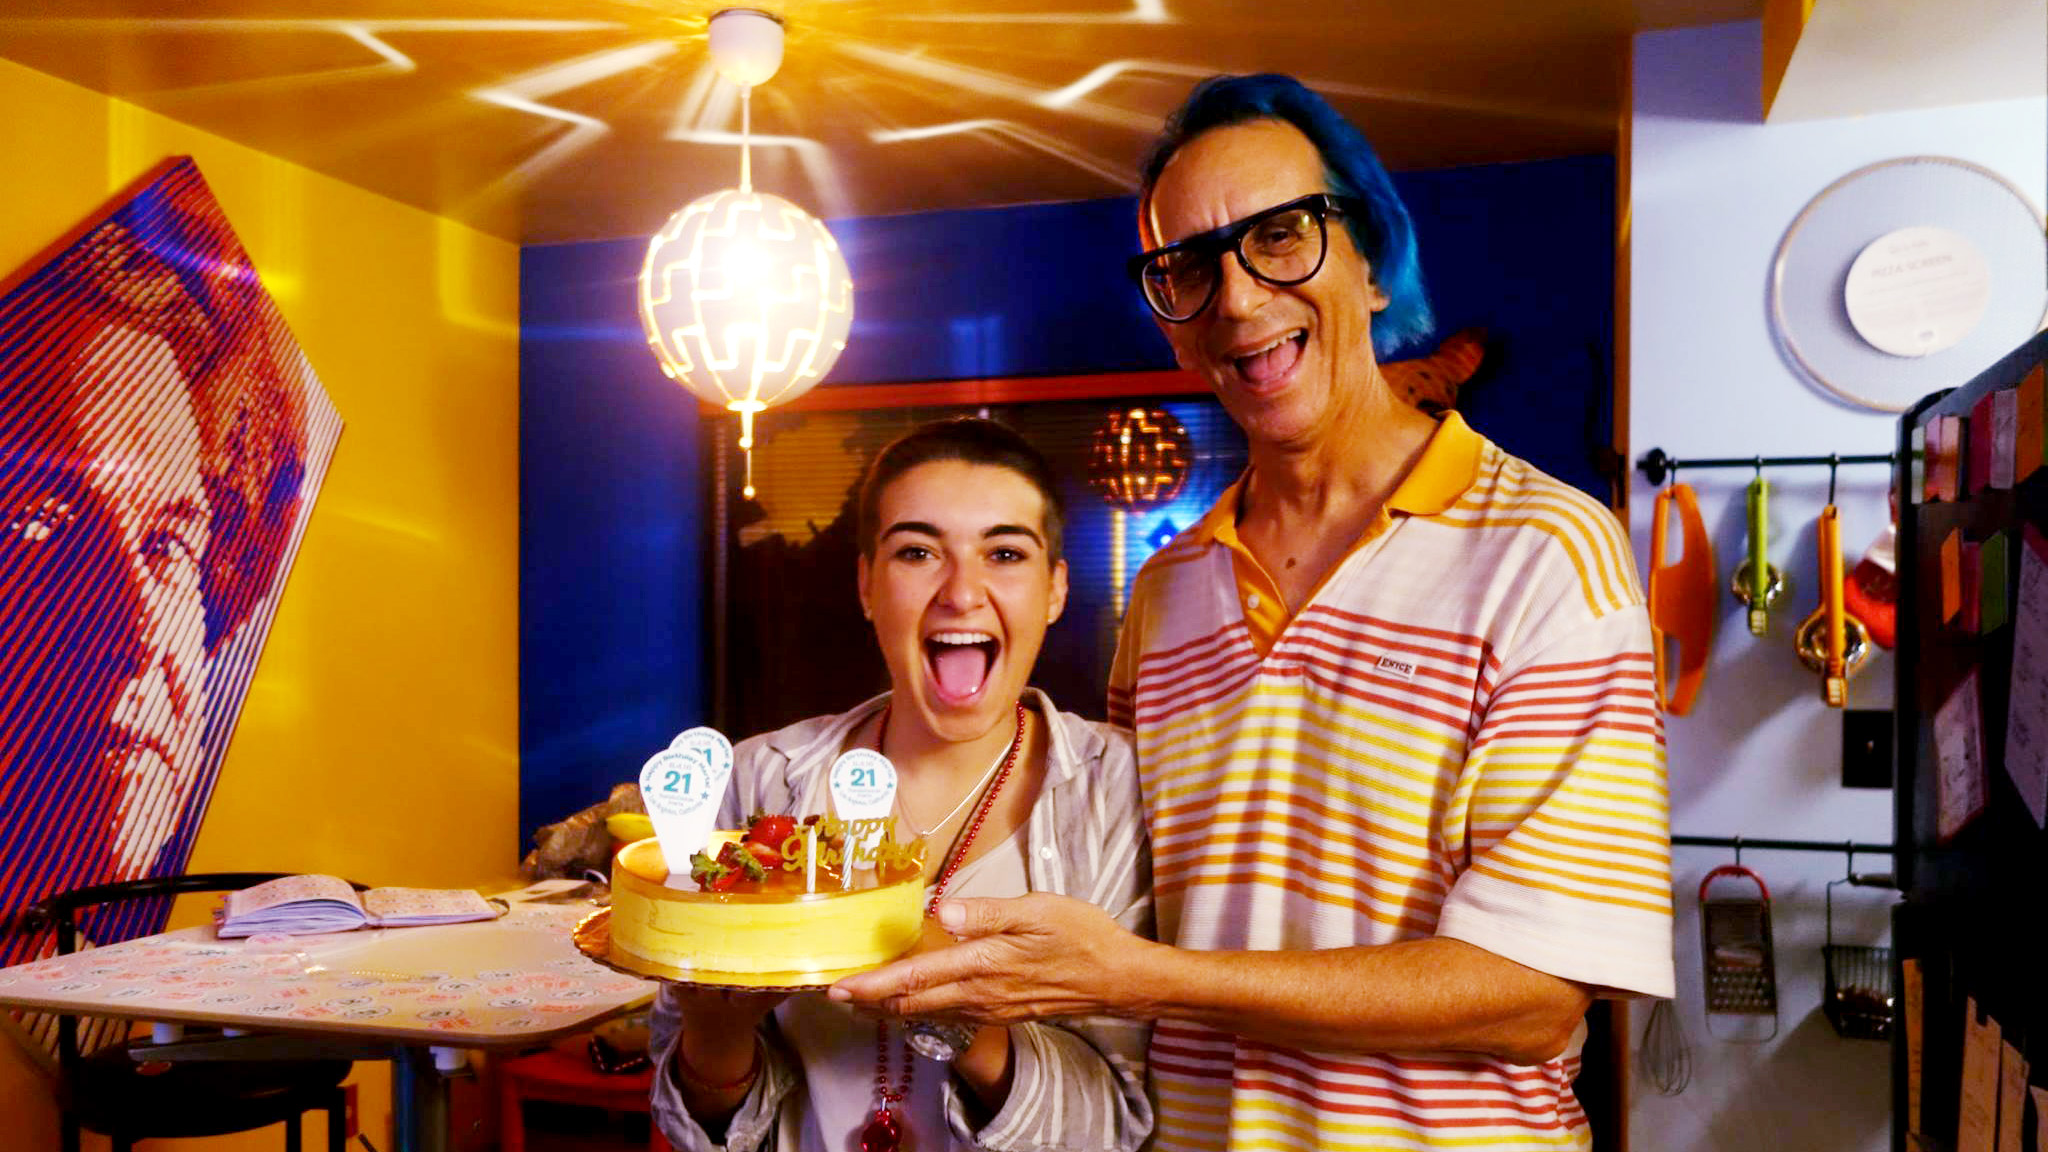 Marta Troya & Glenn Zucman smiling and holding a cake